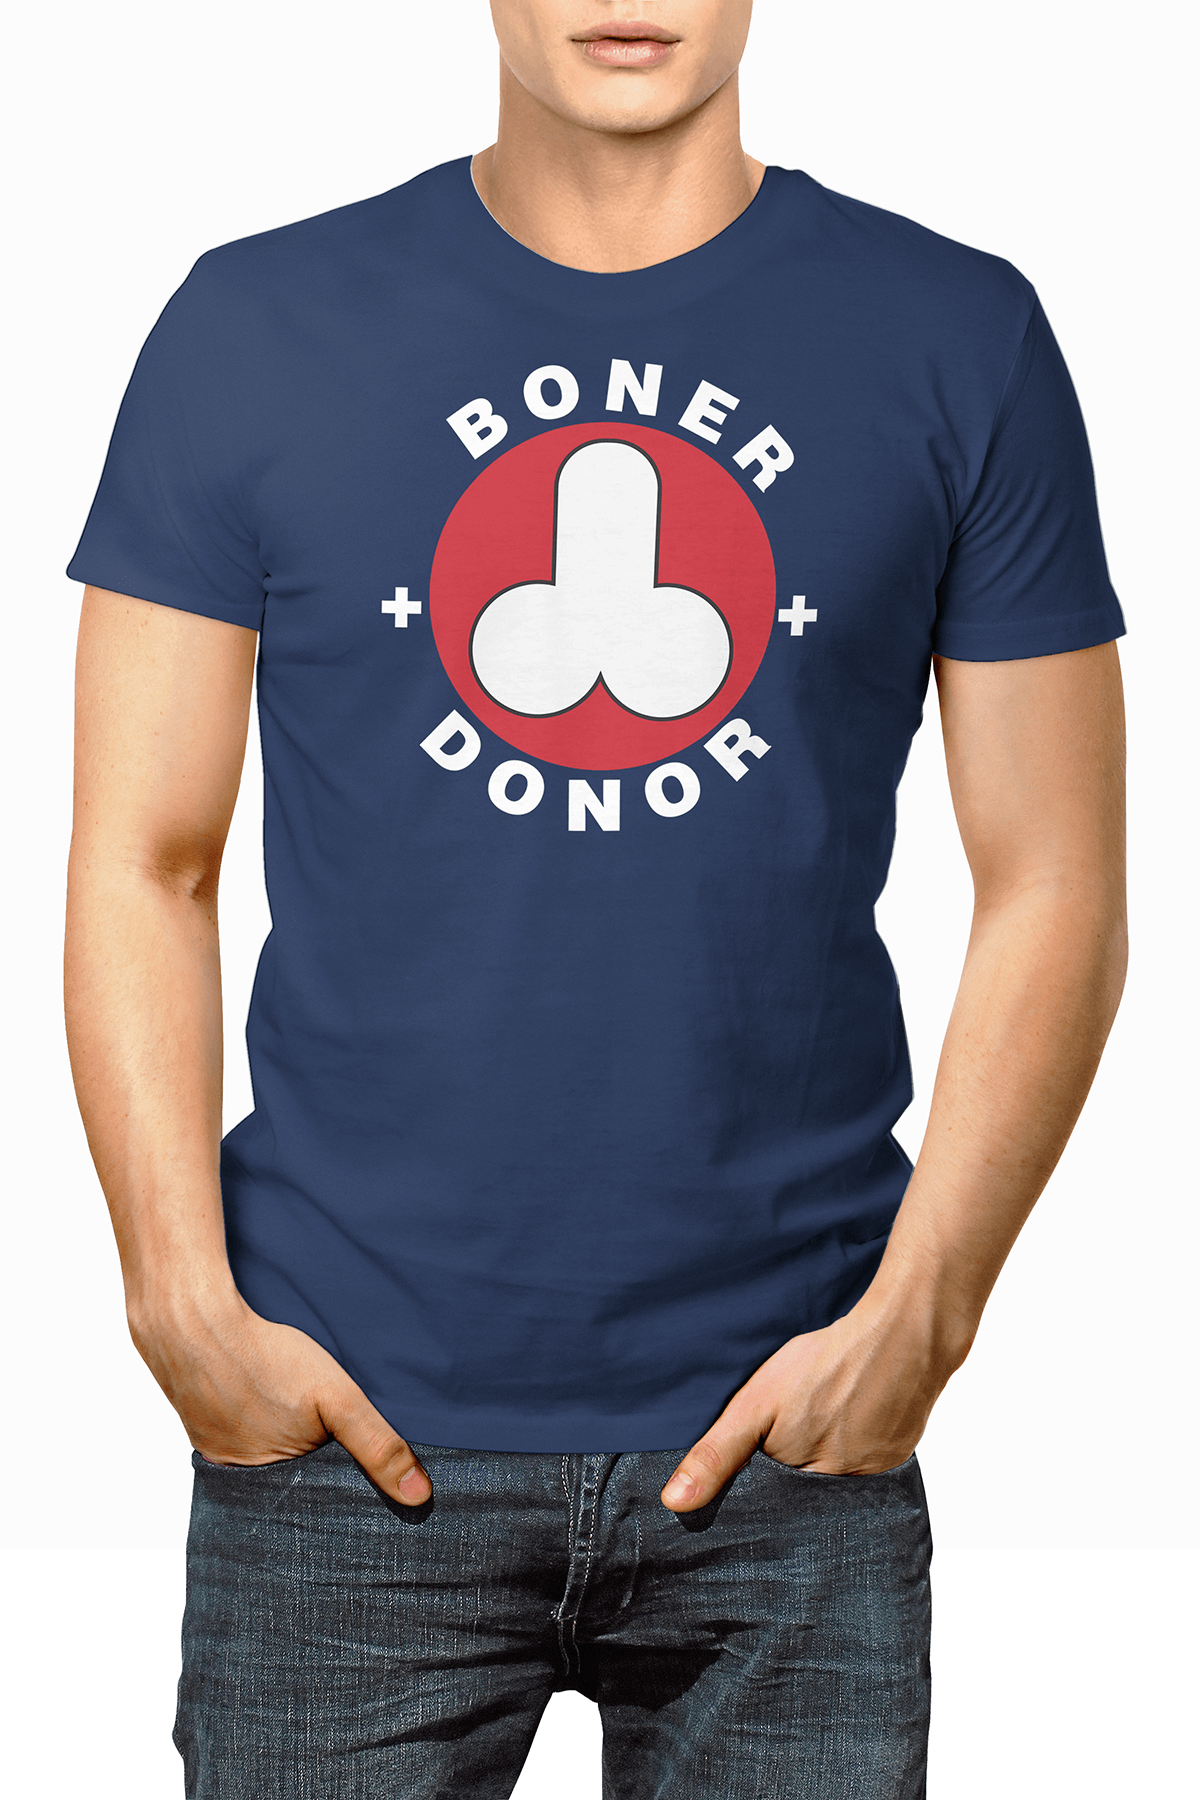 LowTee Boner Donor Graphic Tee